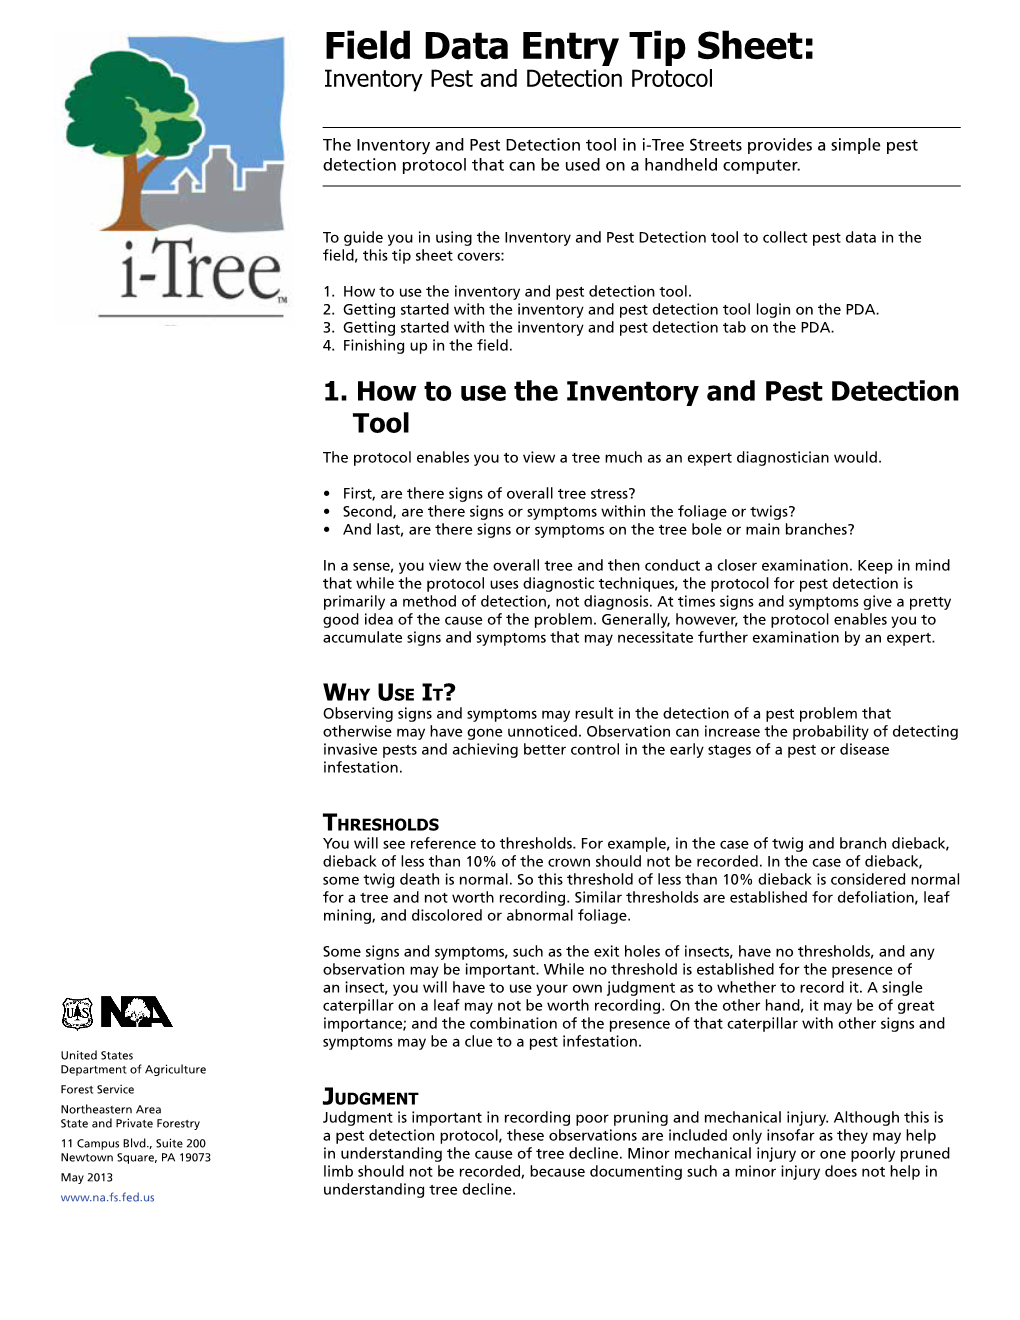 I-Tree Pest Detection Field Data Entry Tip Sheet